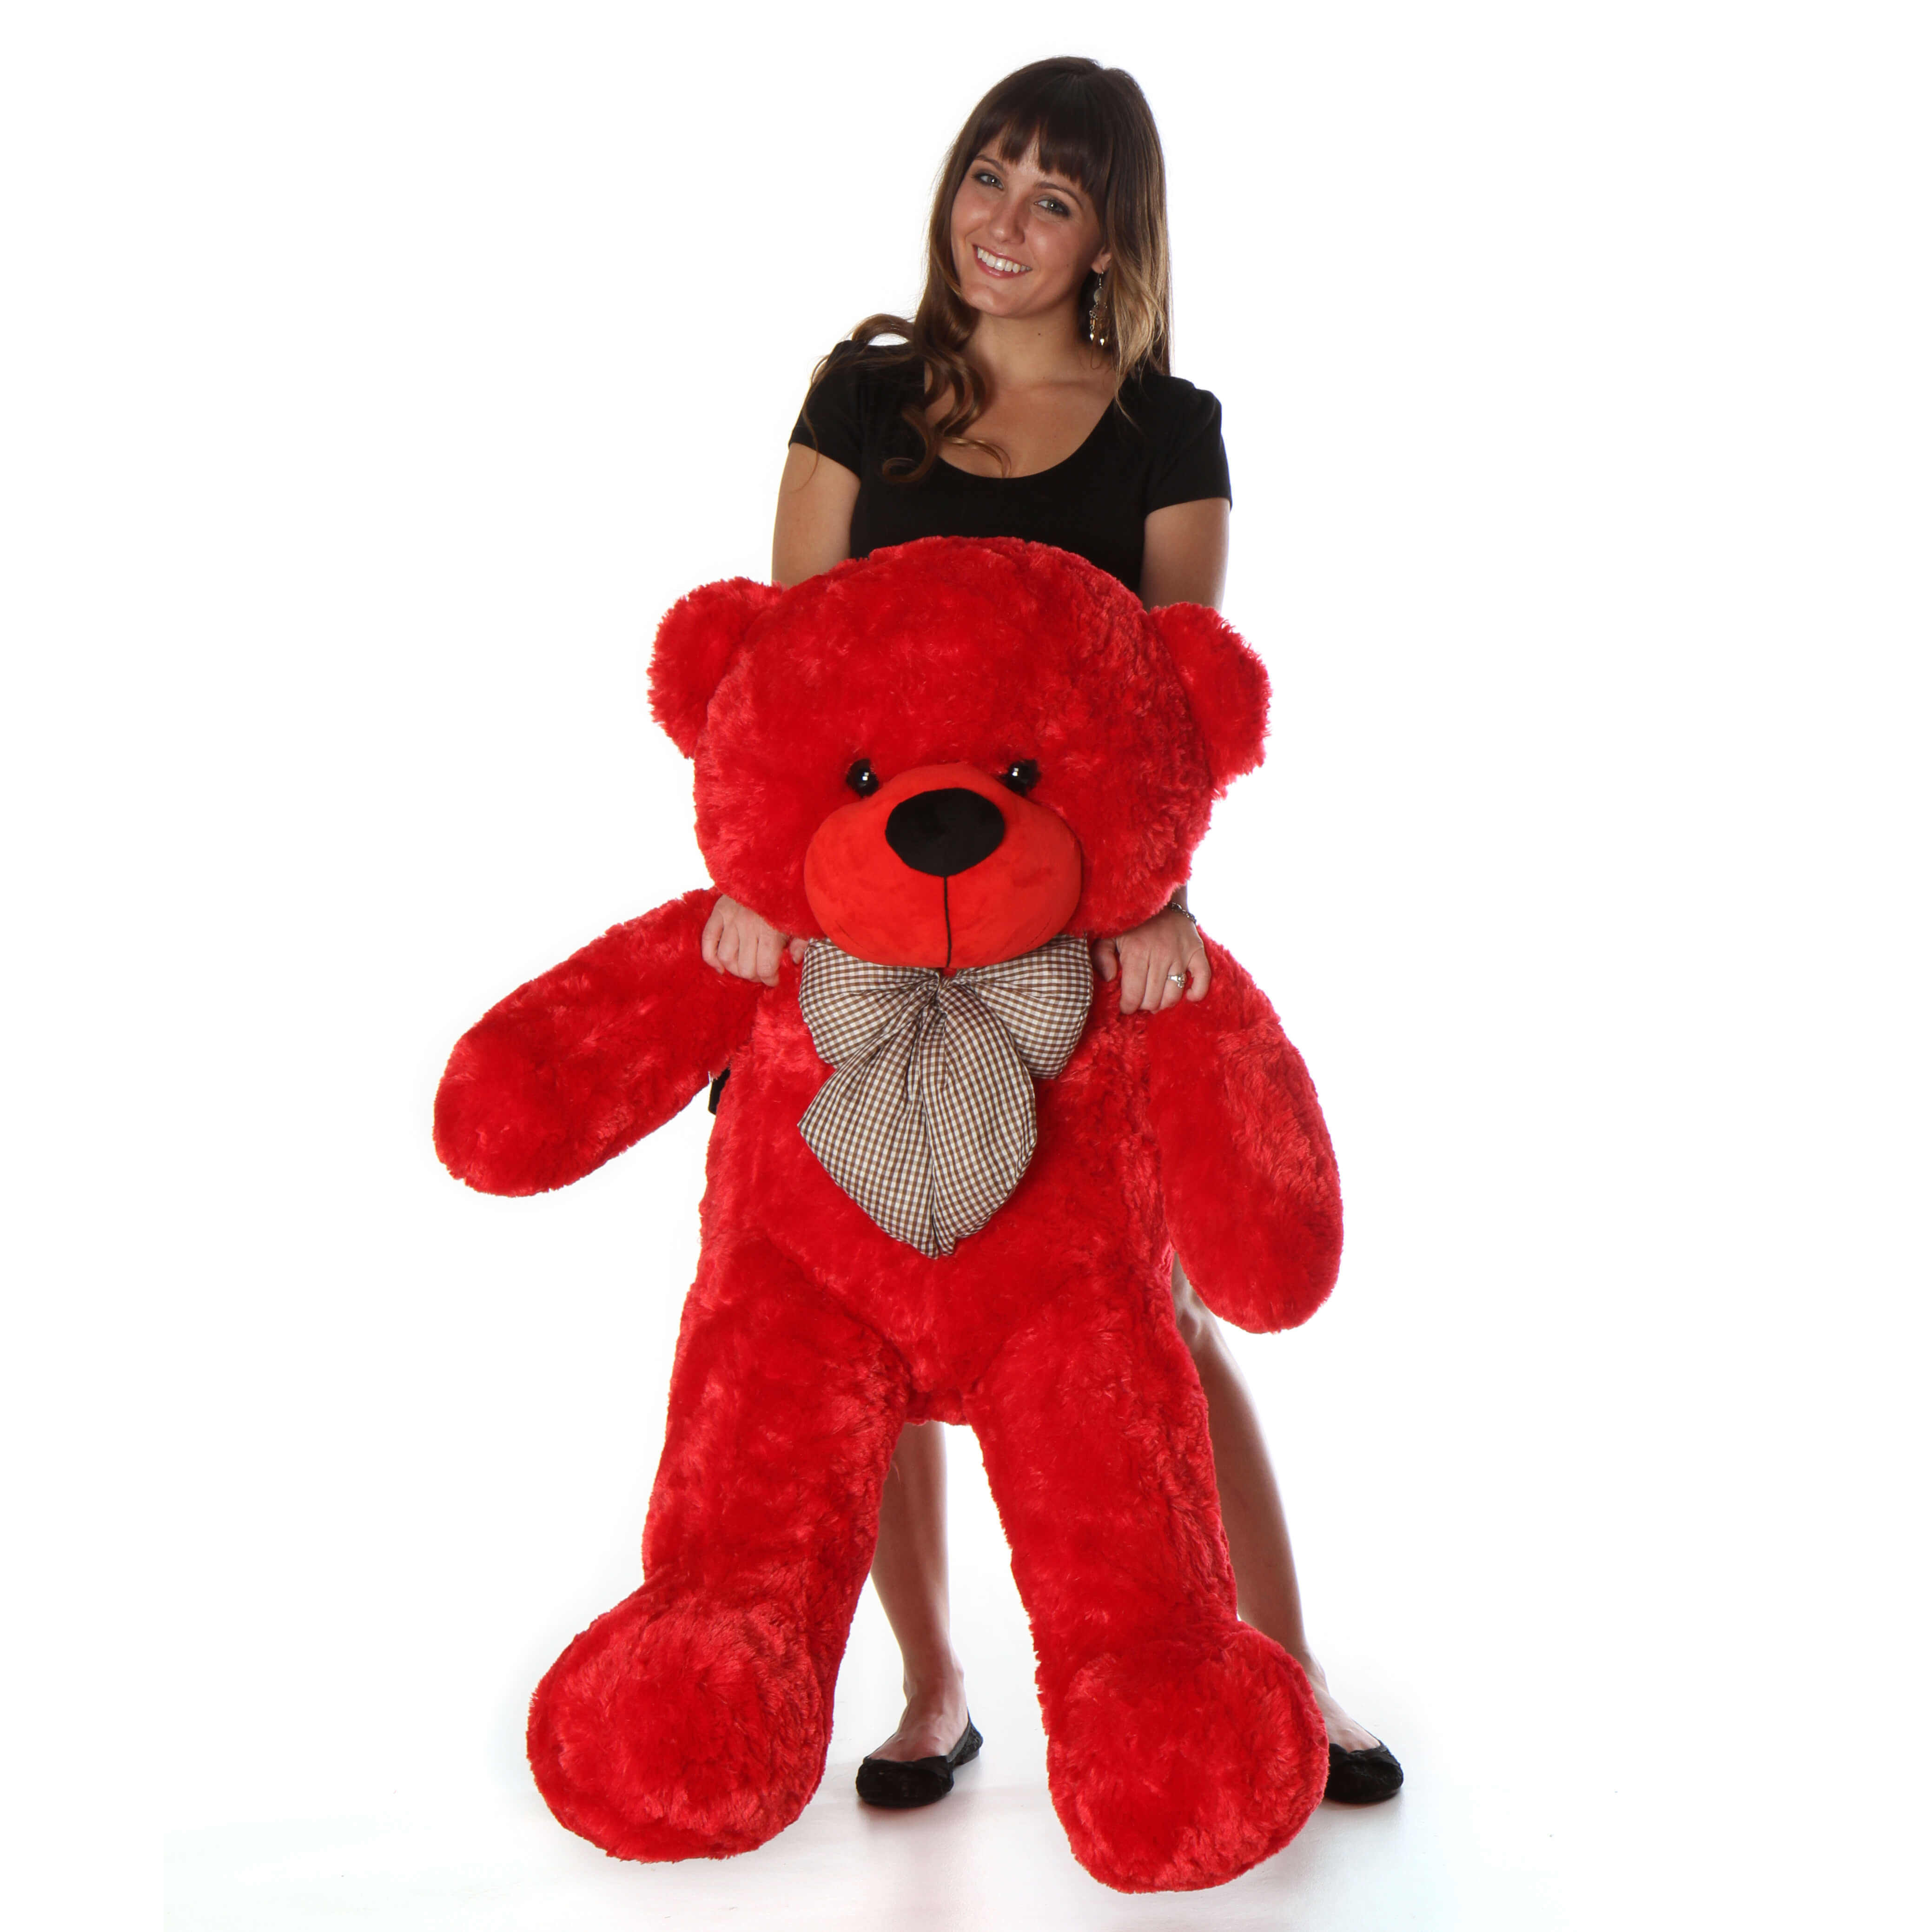 4ft-bitsy-cuddles-red-teddy-bear-perfect-gift-1.jpg